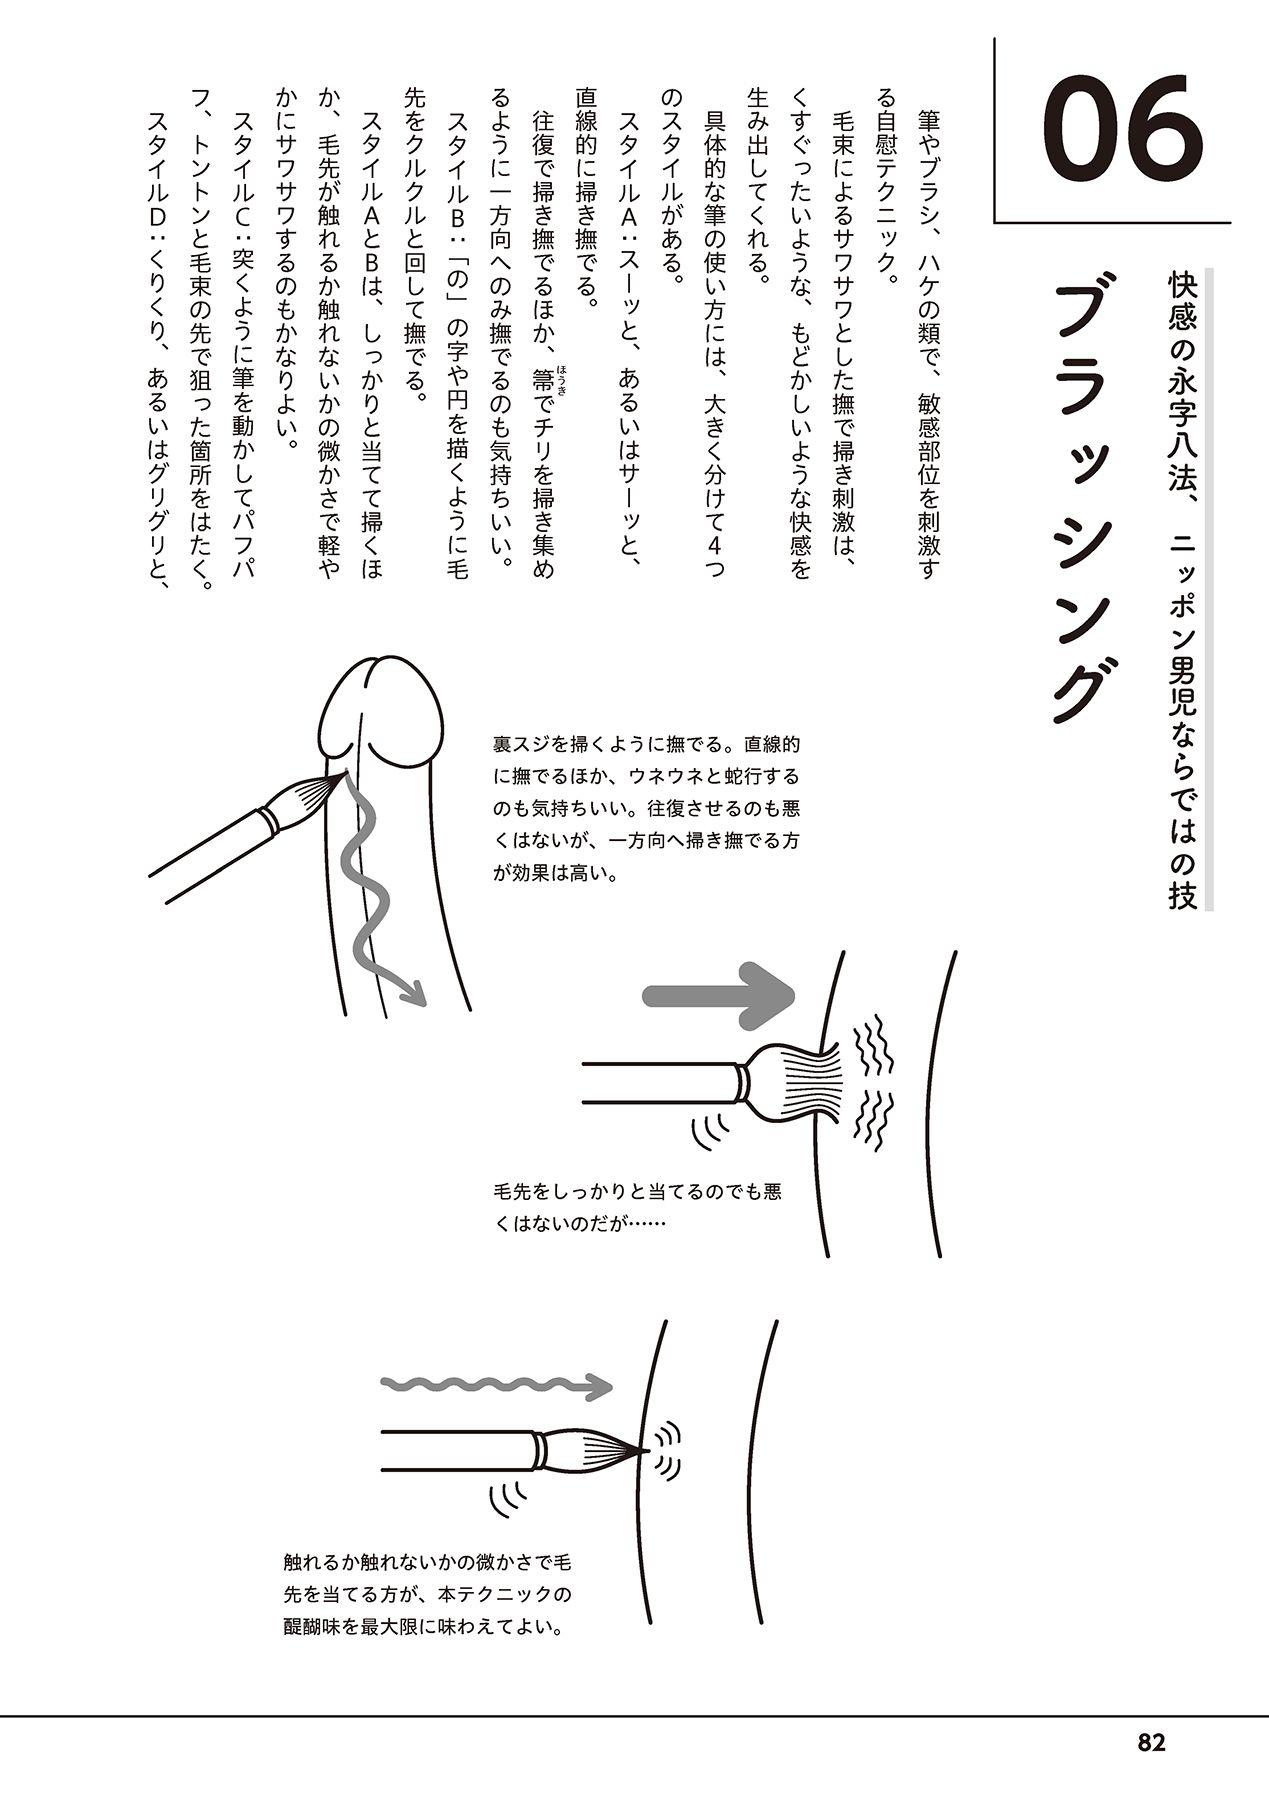 Otoko no Jii Onanie Kanzen Manual Illustration Han...... Onanie Play 83